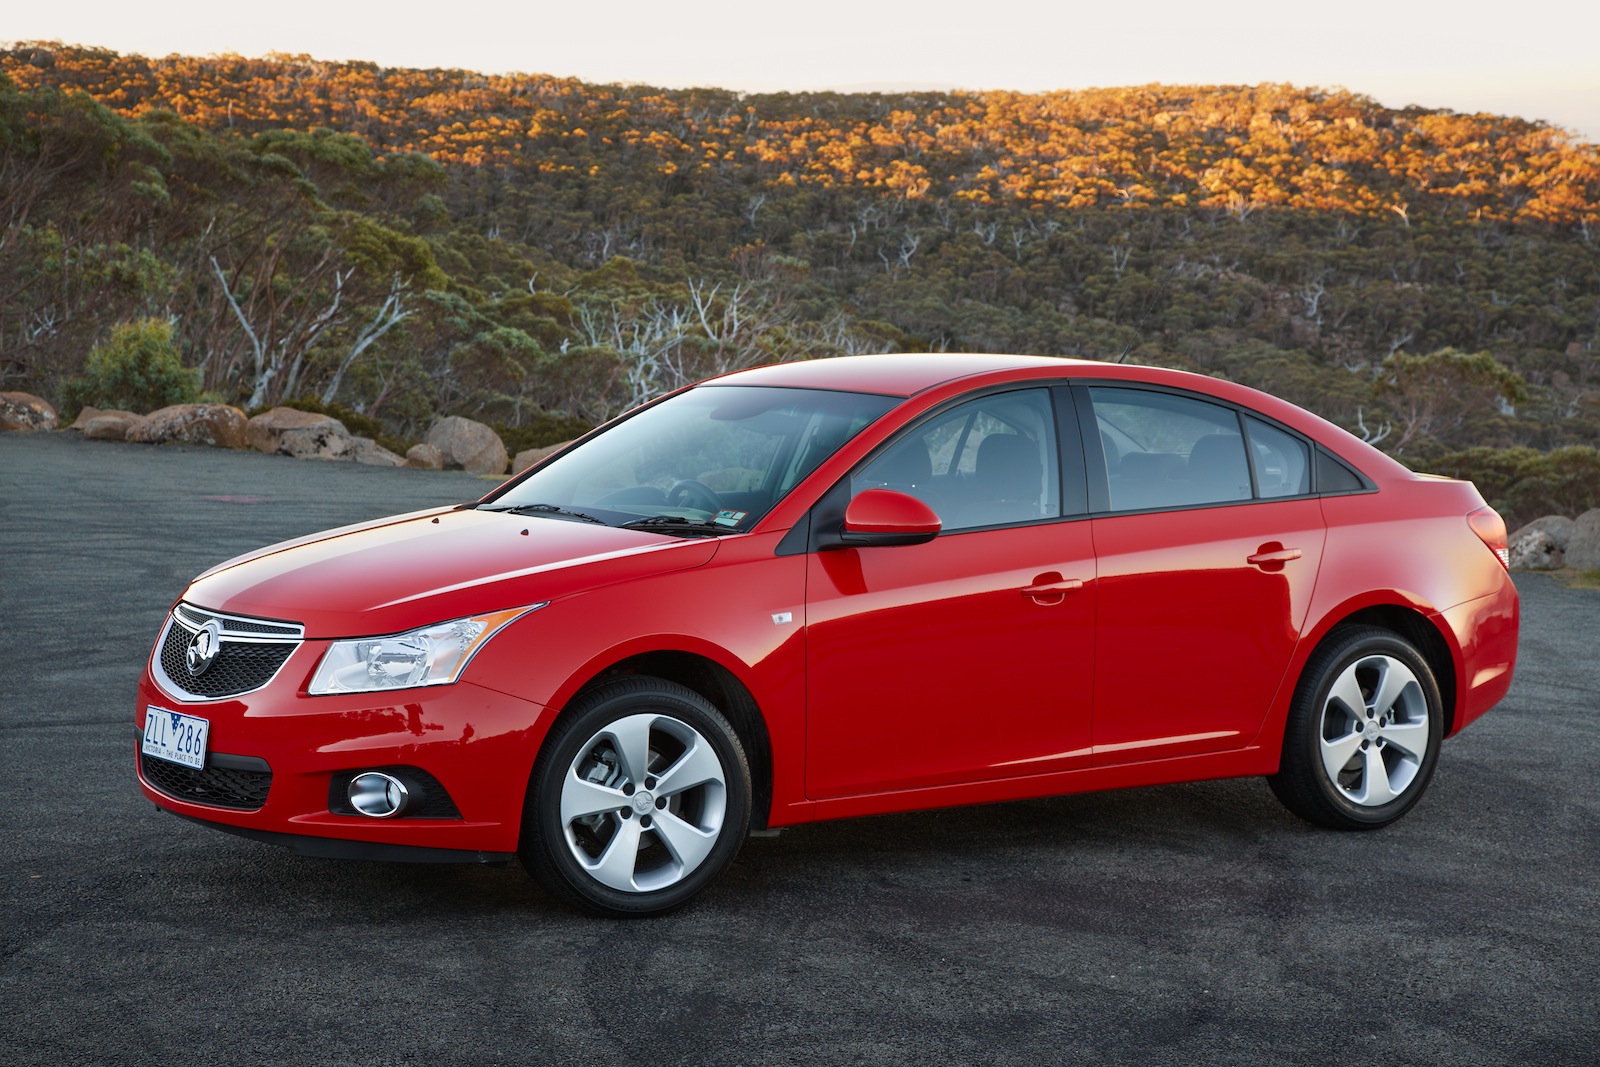 Holden Cruze gets $19,490 price tag, 1.6-litre turbo availability - photos | CarAdvice